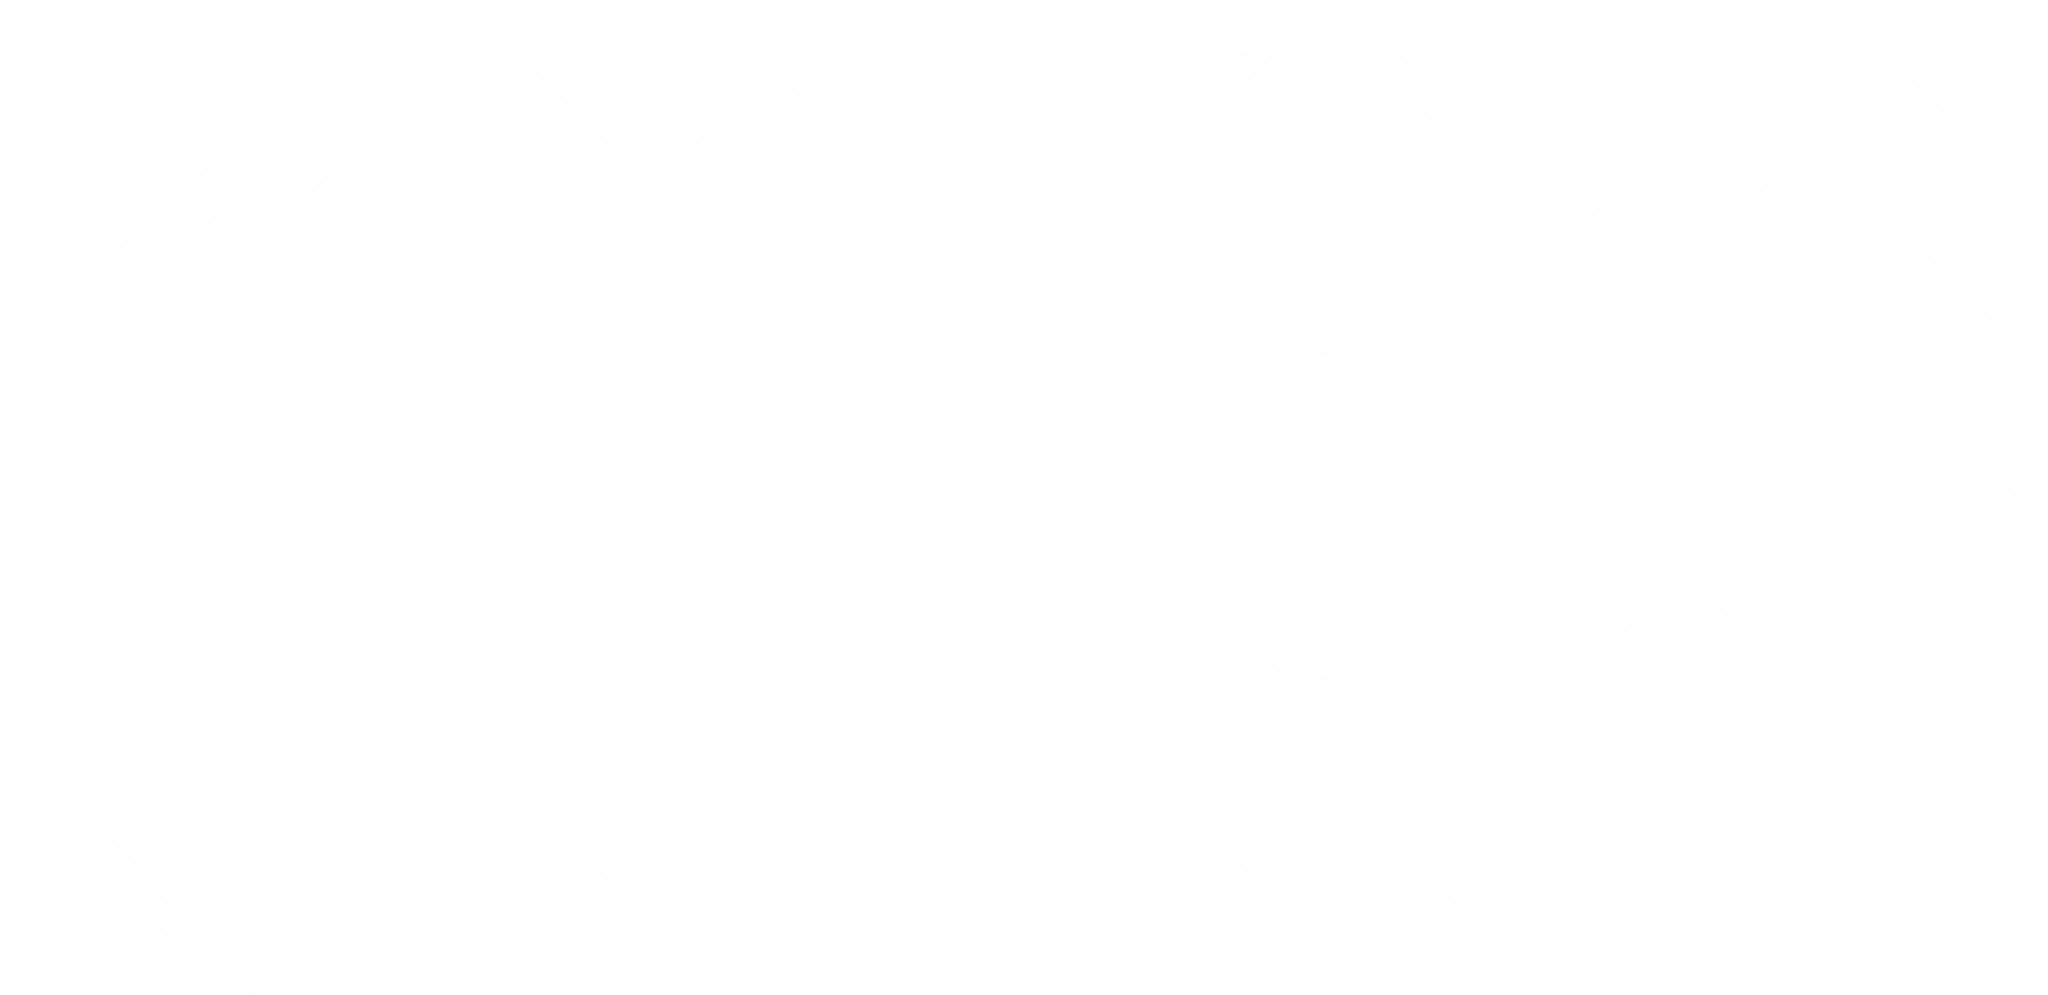 MiddleFingerMoney